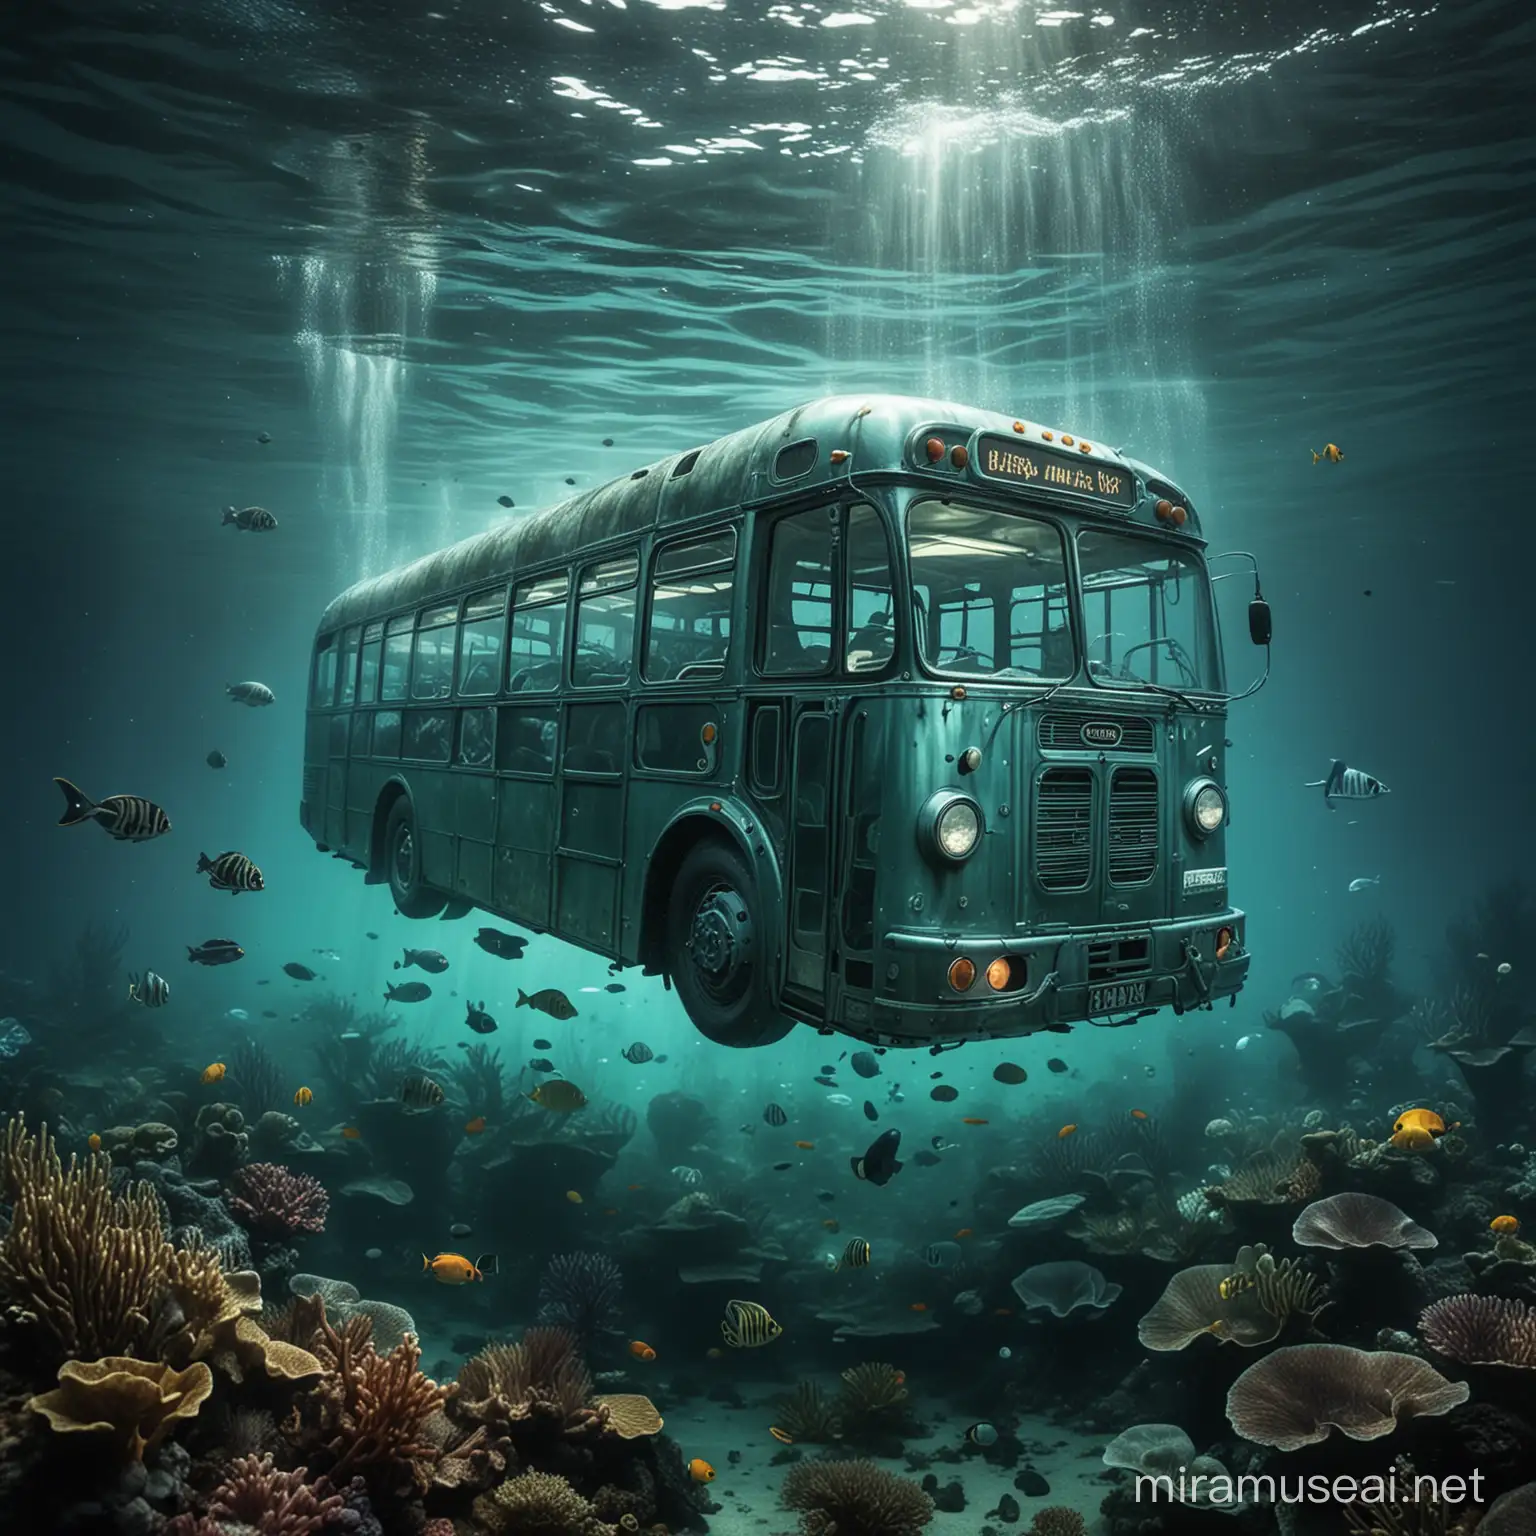 Underwater Fantasy Themed Bus